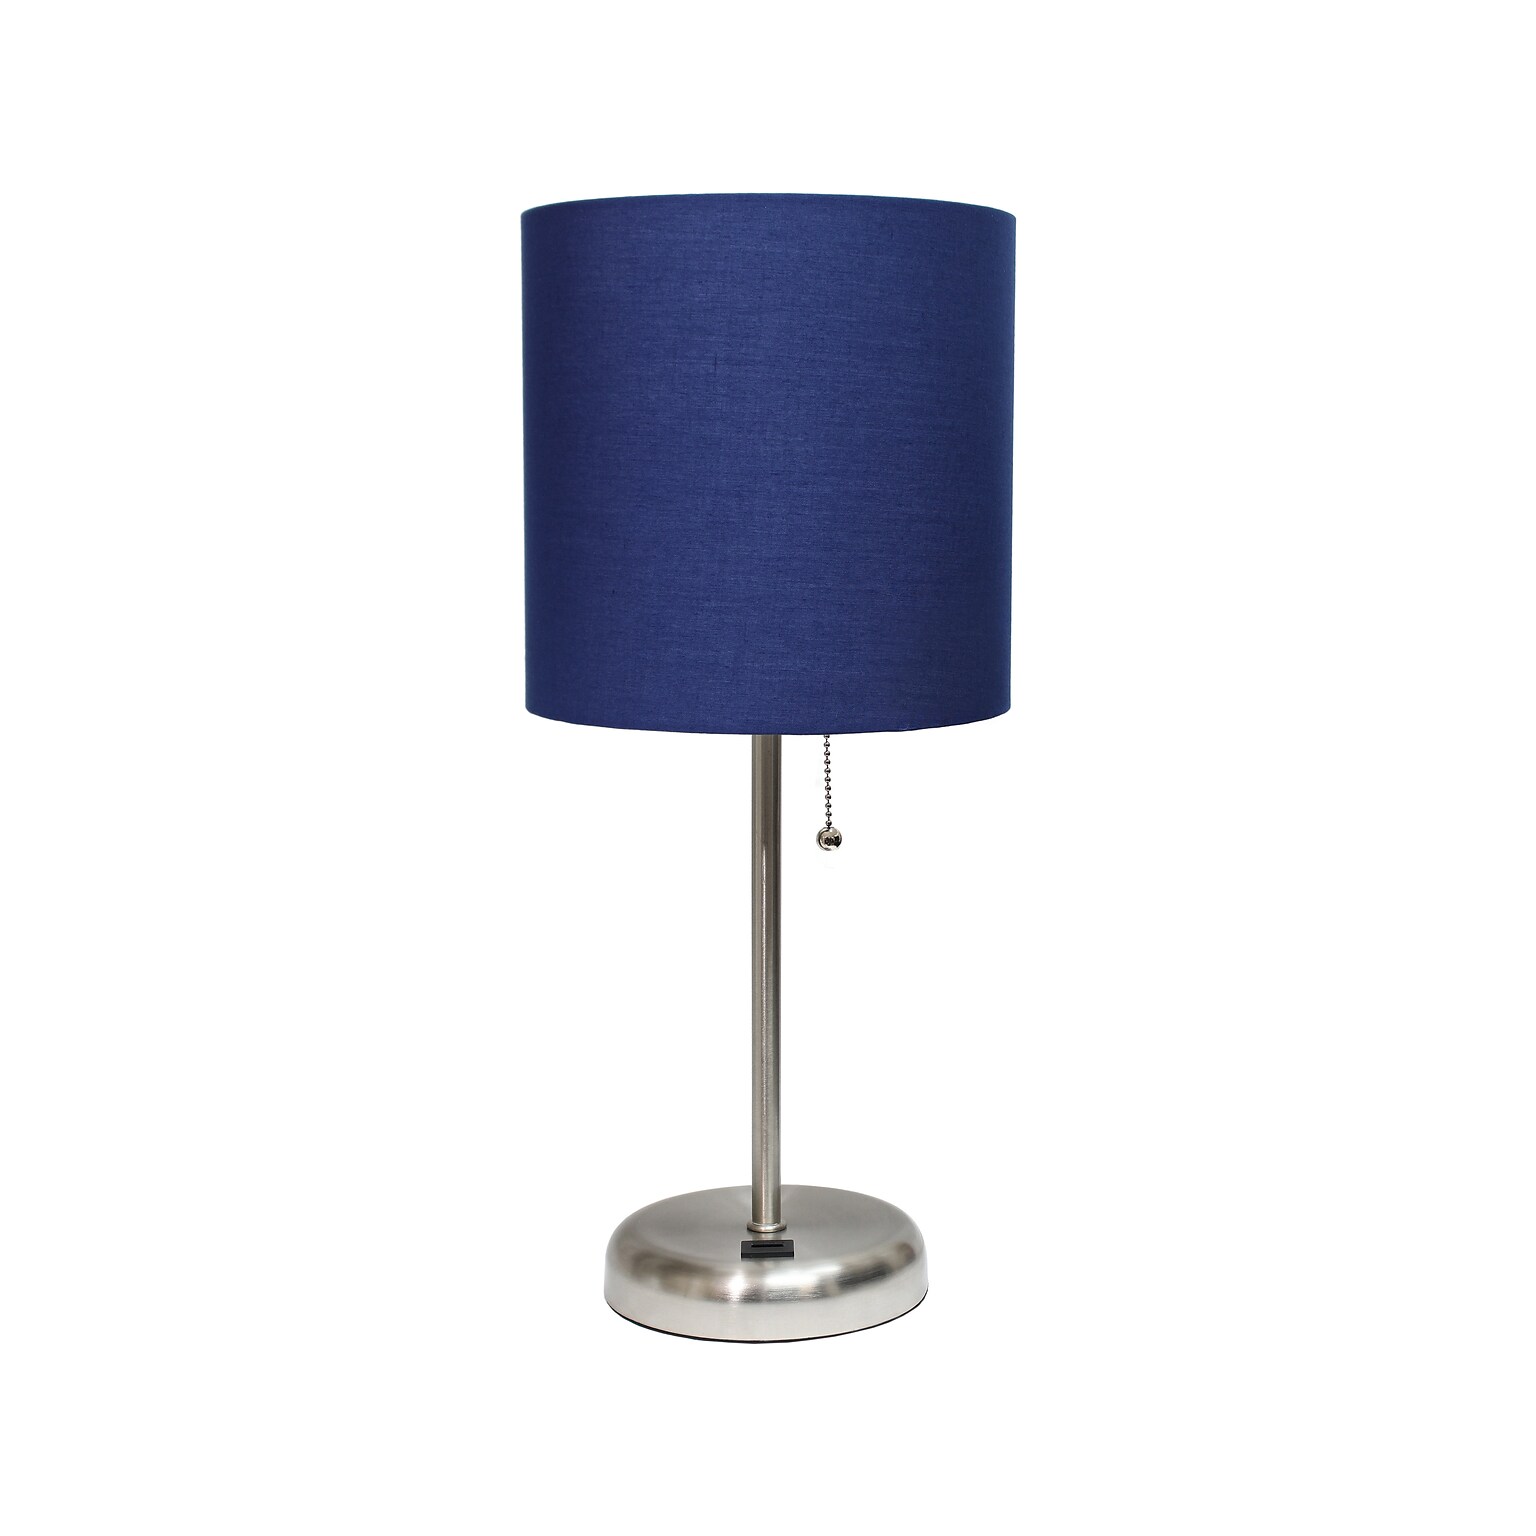 Creekwood Home Oslo LED Table Lamp, Brushed Steel/Navy Blue (CWT-2012-NV)